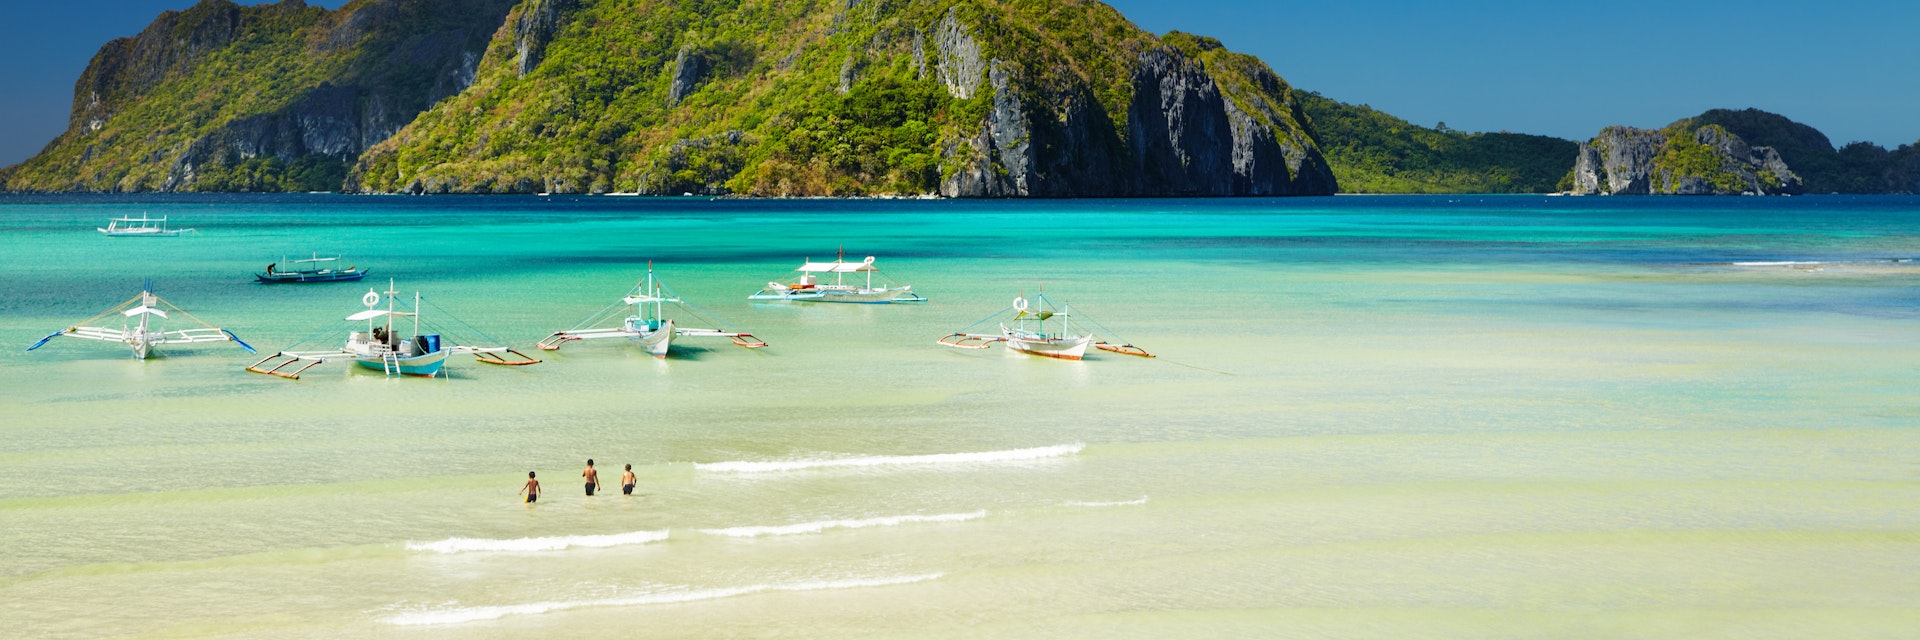 View of green mountain and tropical beach, El Nido bay, Palawan island, Philippines
beach, boat, cadlao, el nido, island, palawan, philippines, sea, tropical